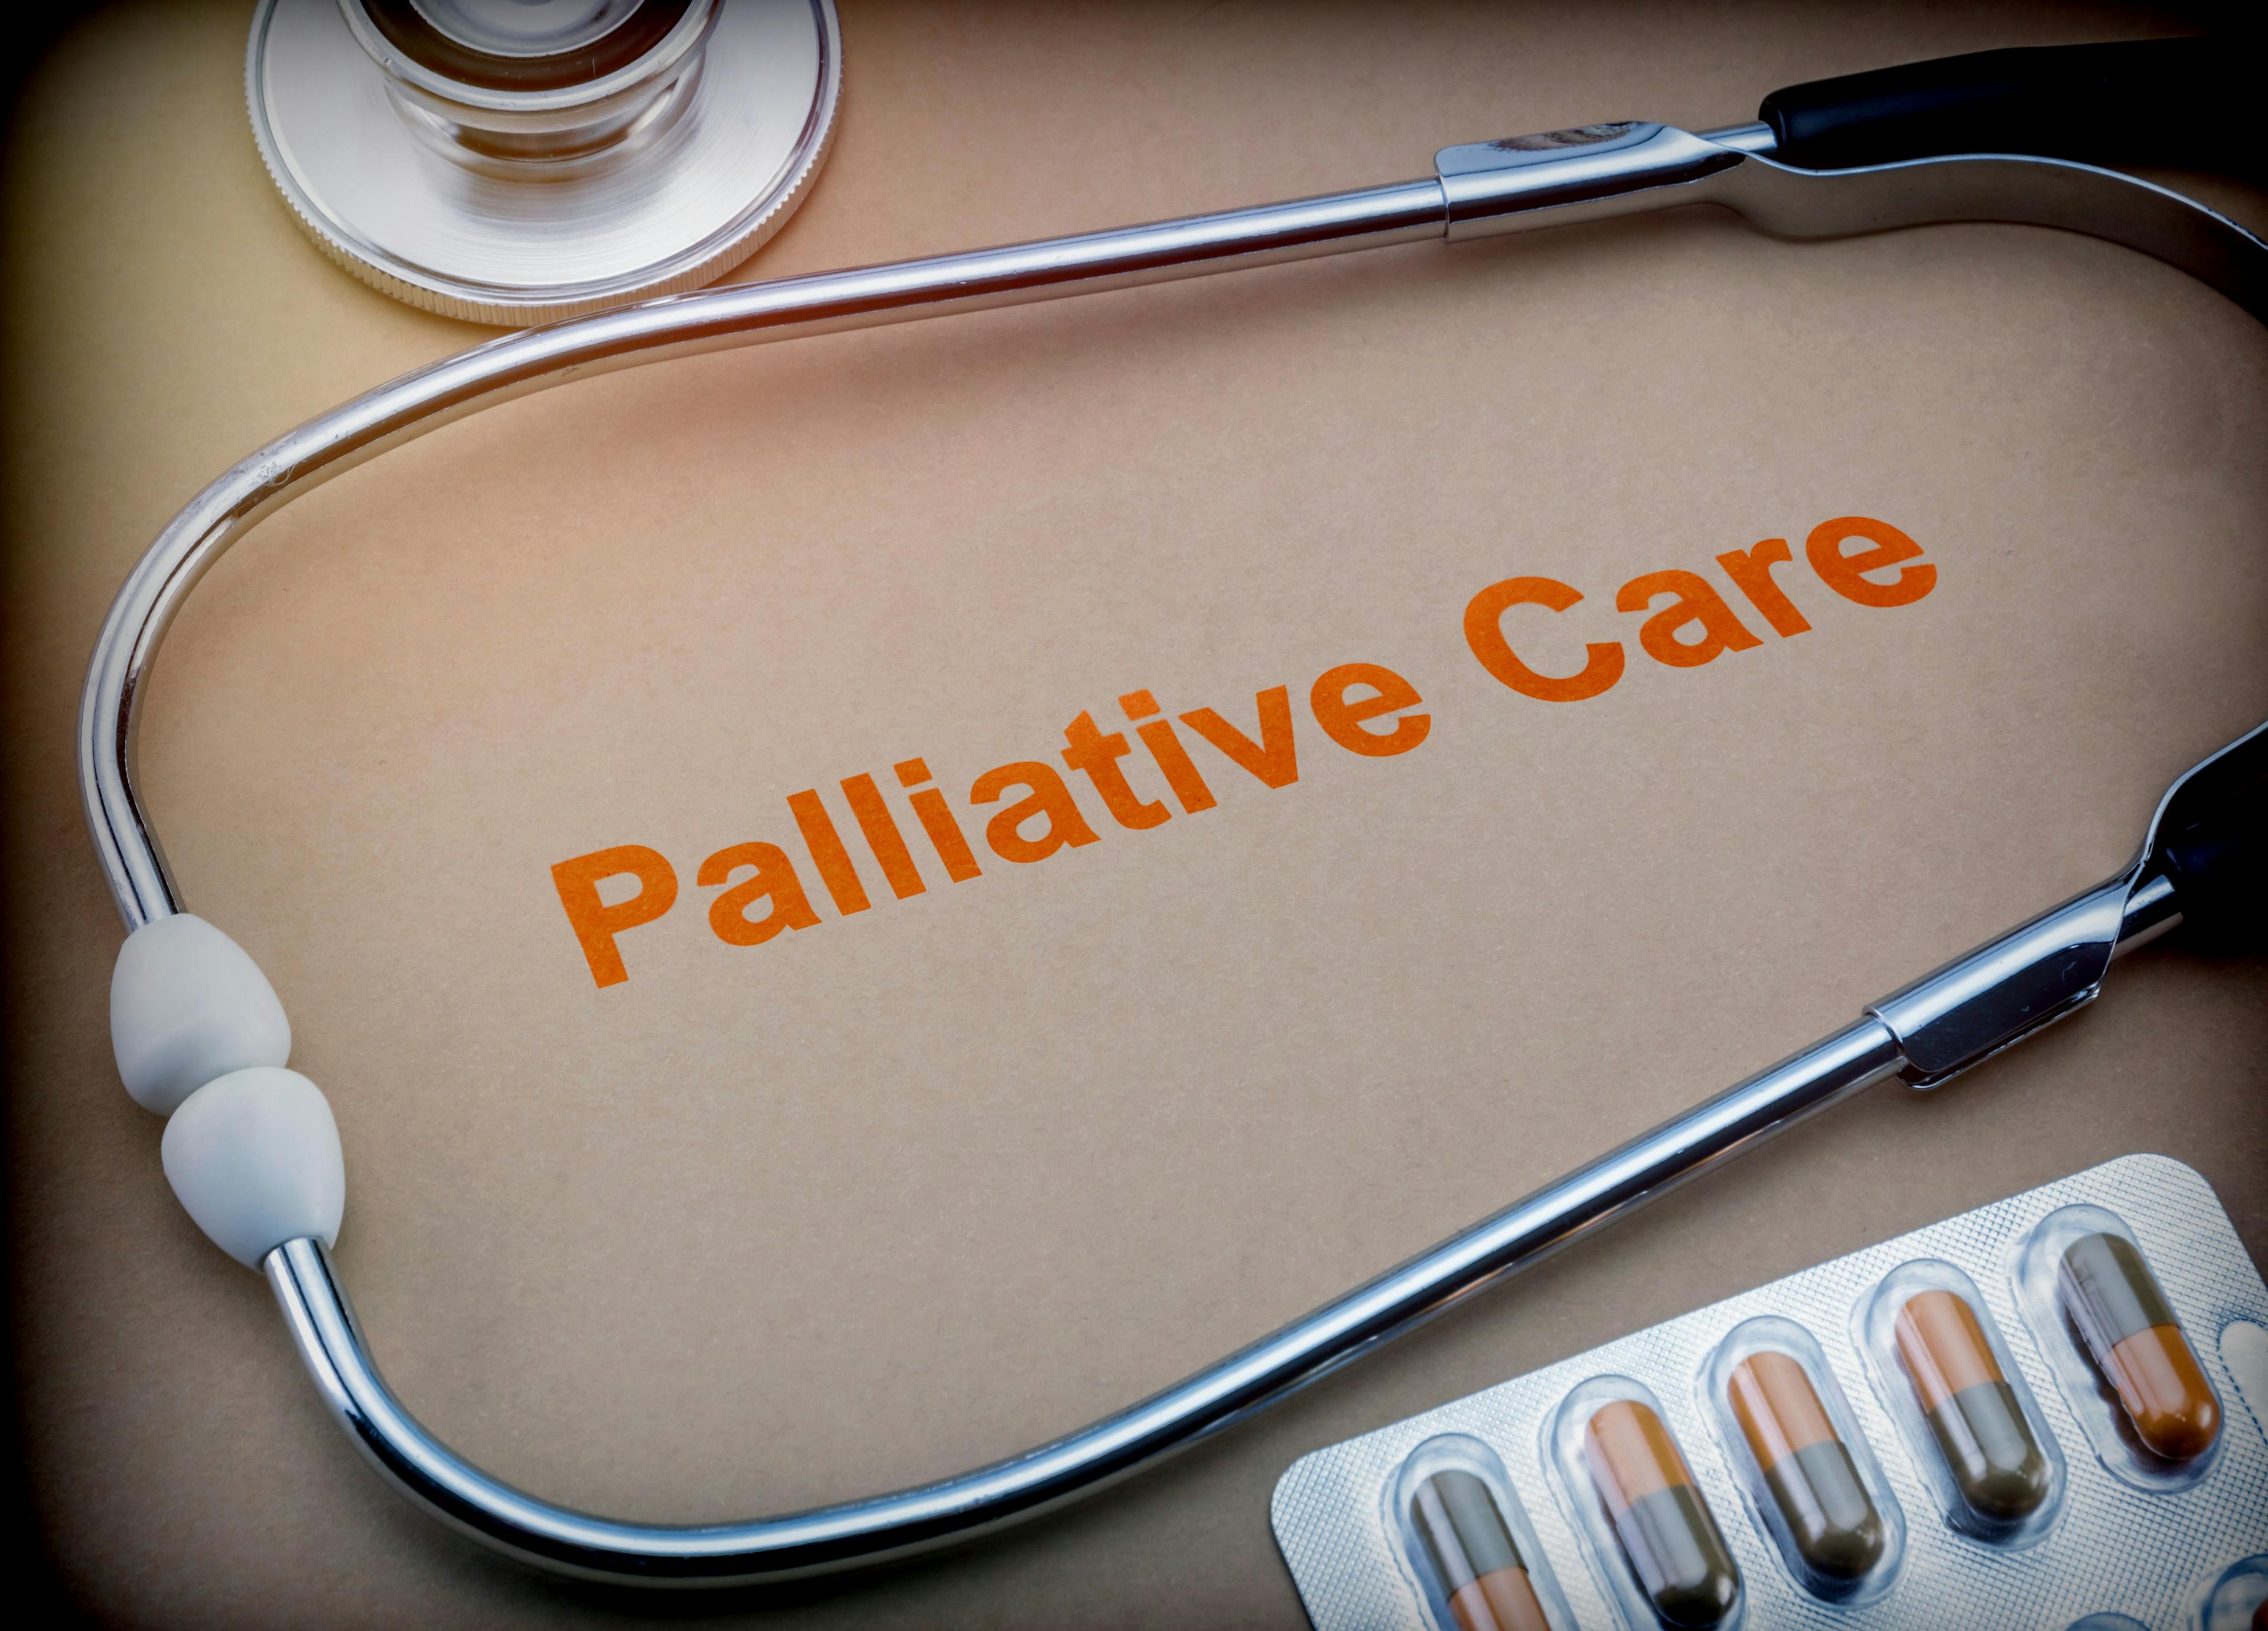 Palliative care, stethoscope and blister pills, conceptual image | Image credit: © Felipe Caparrós - stock.adobe.com